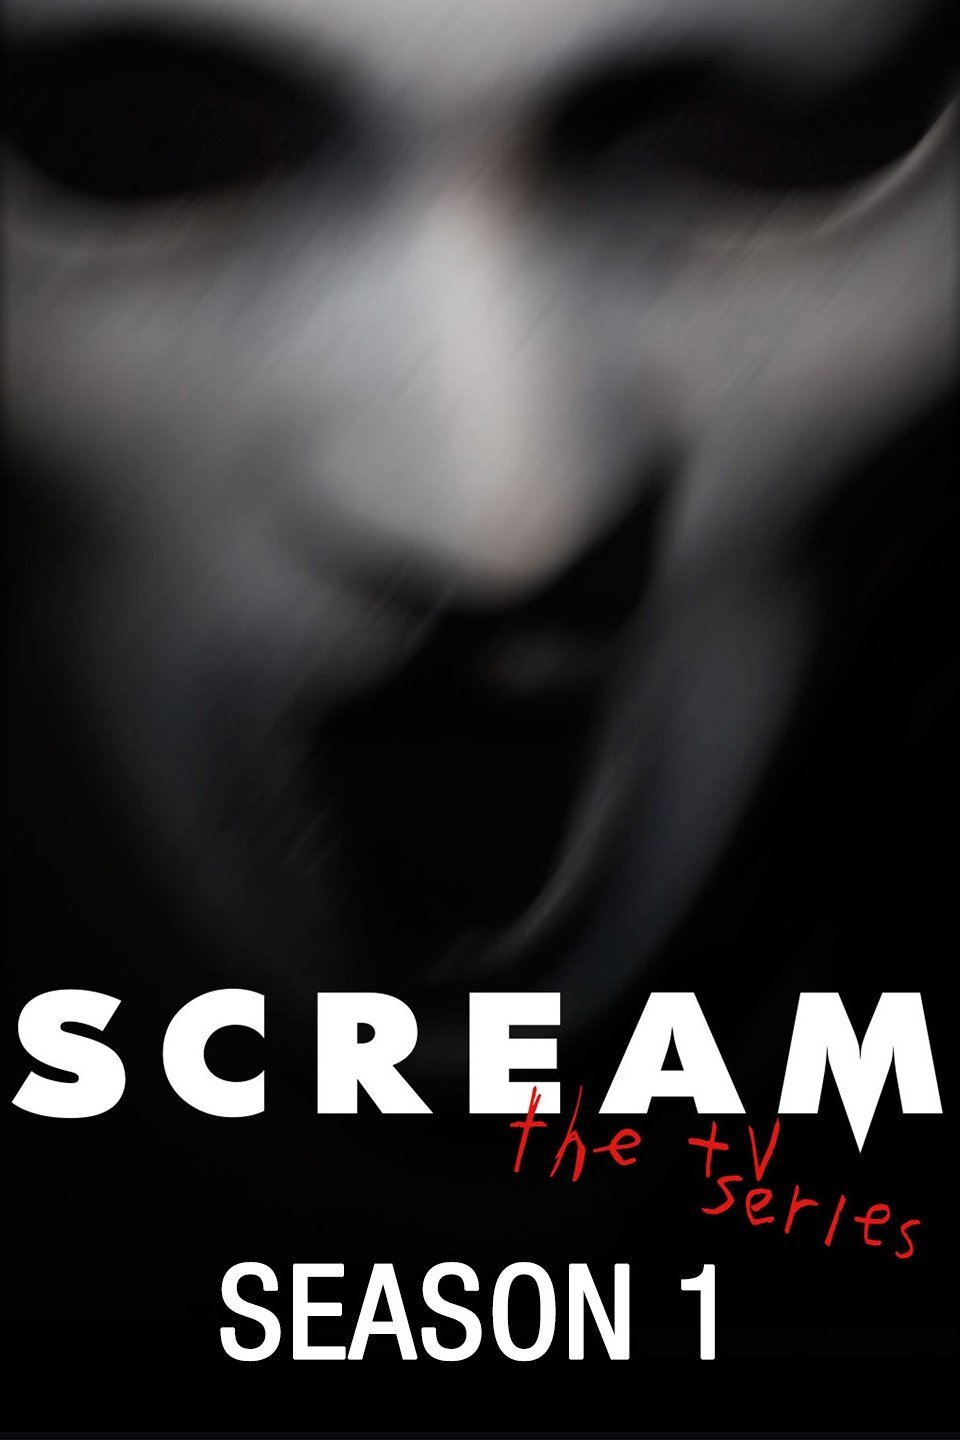 caress Loaded Rank Scream - Rotten Tomatoes